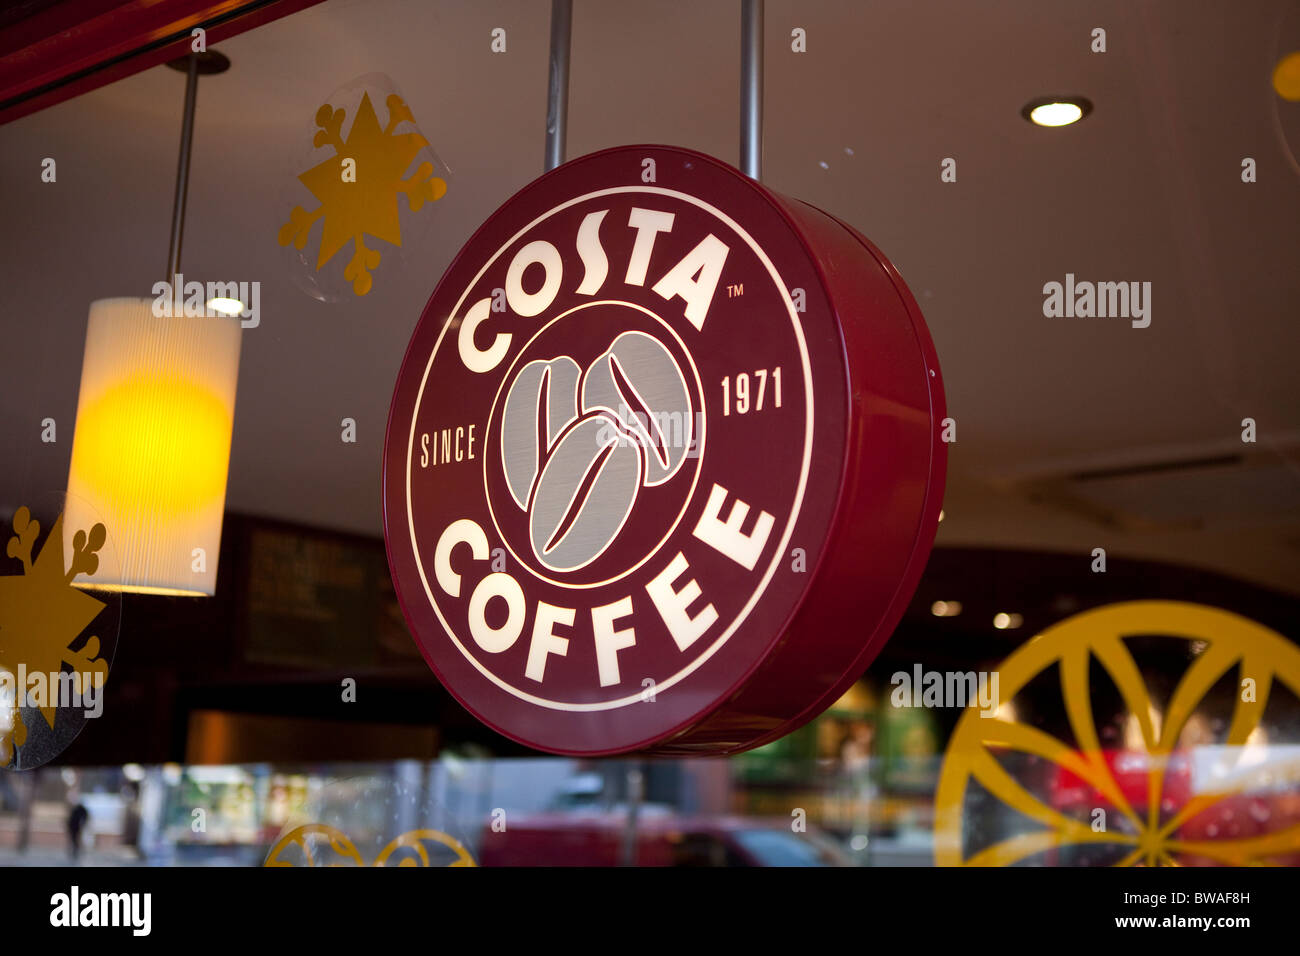 Costa coffee shop Stock Photo